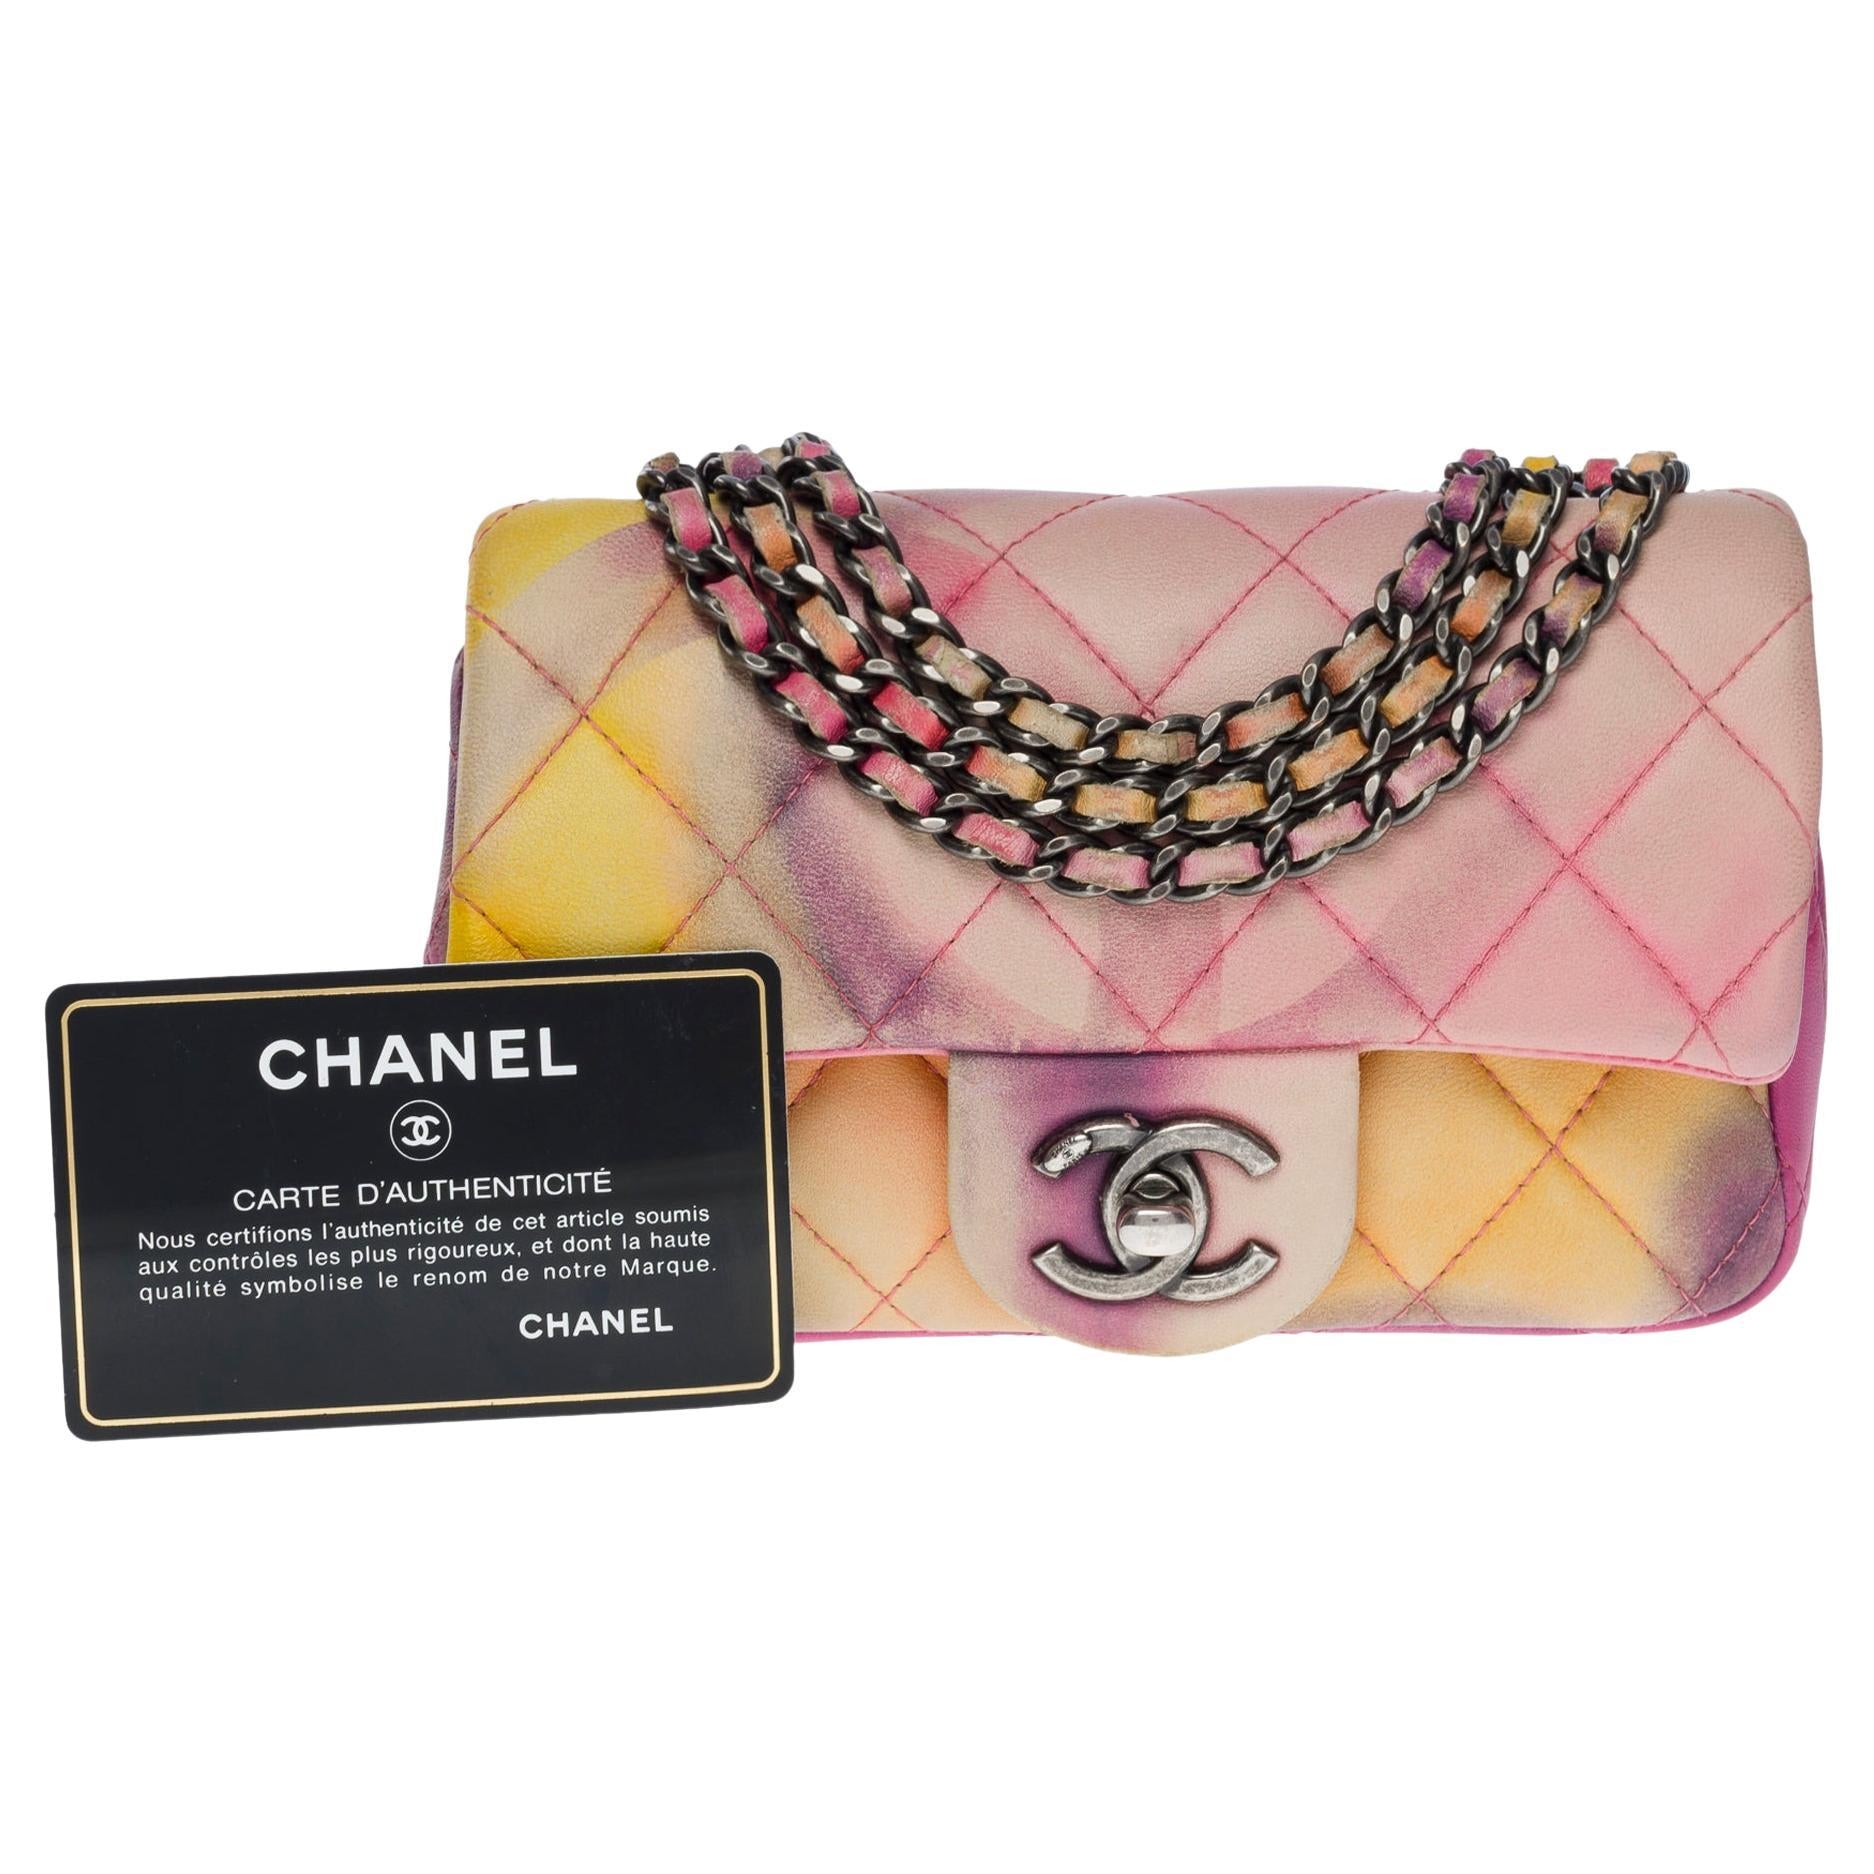 Chanel - Multicolor Knit Needlepoint Patchwork CC Shoulder Bag